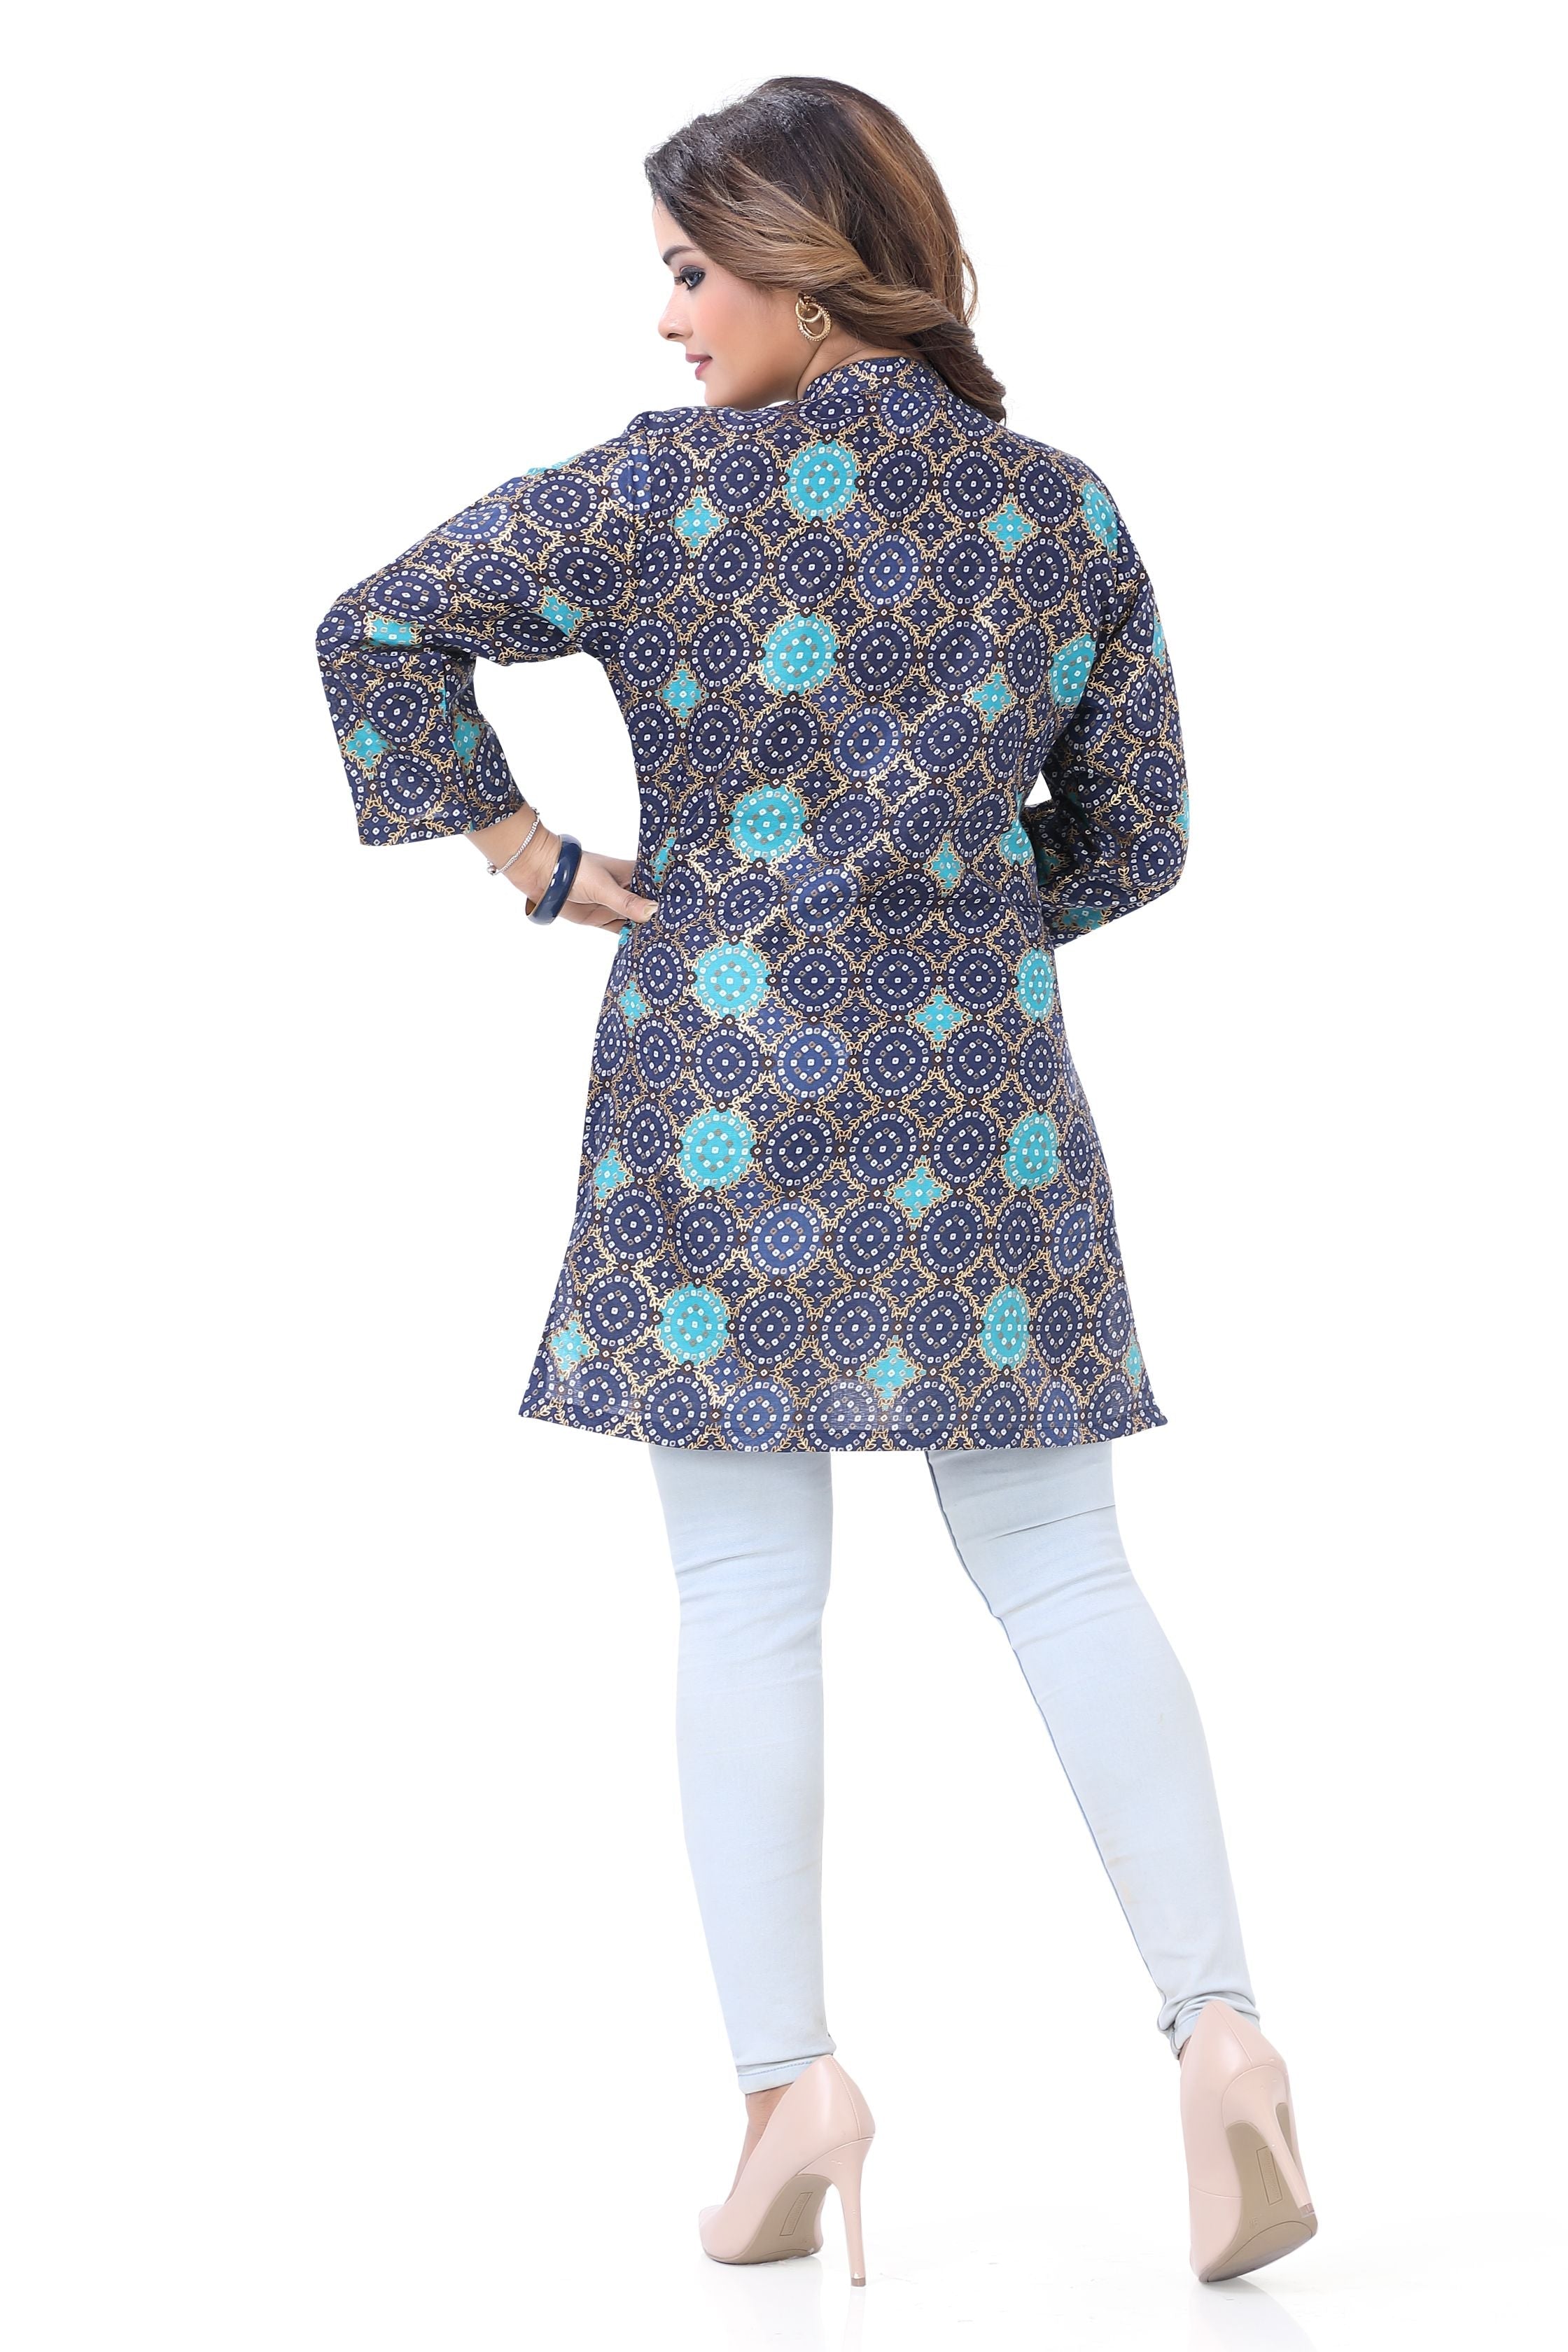 Blue Colour Bandhani Short Kurti Top - Premium Short Kurti from Dulhan Exclusives - Just $29! Shop now at Dulhan Exclusives